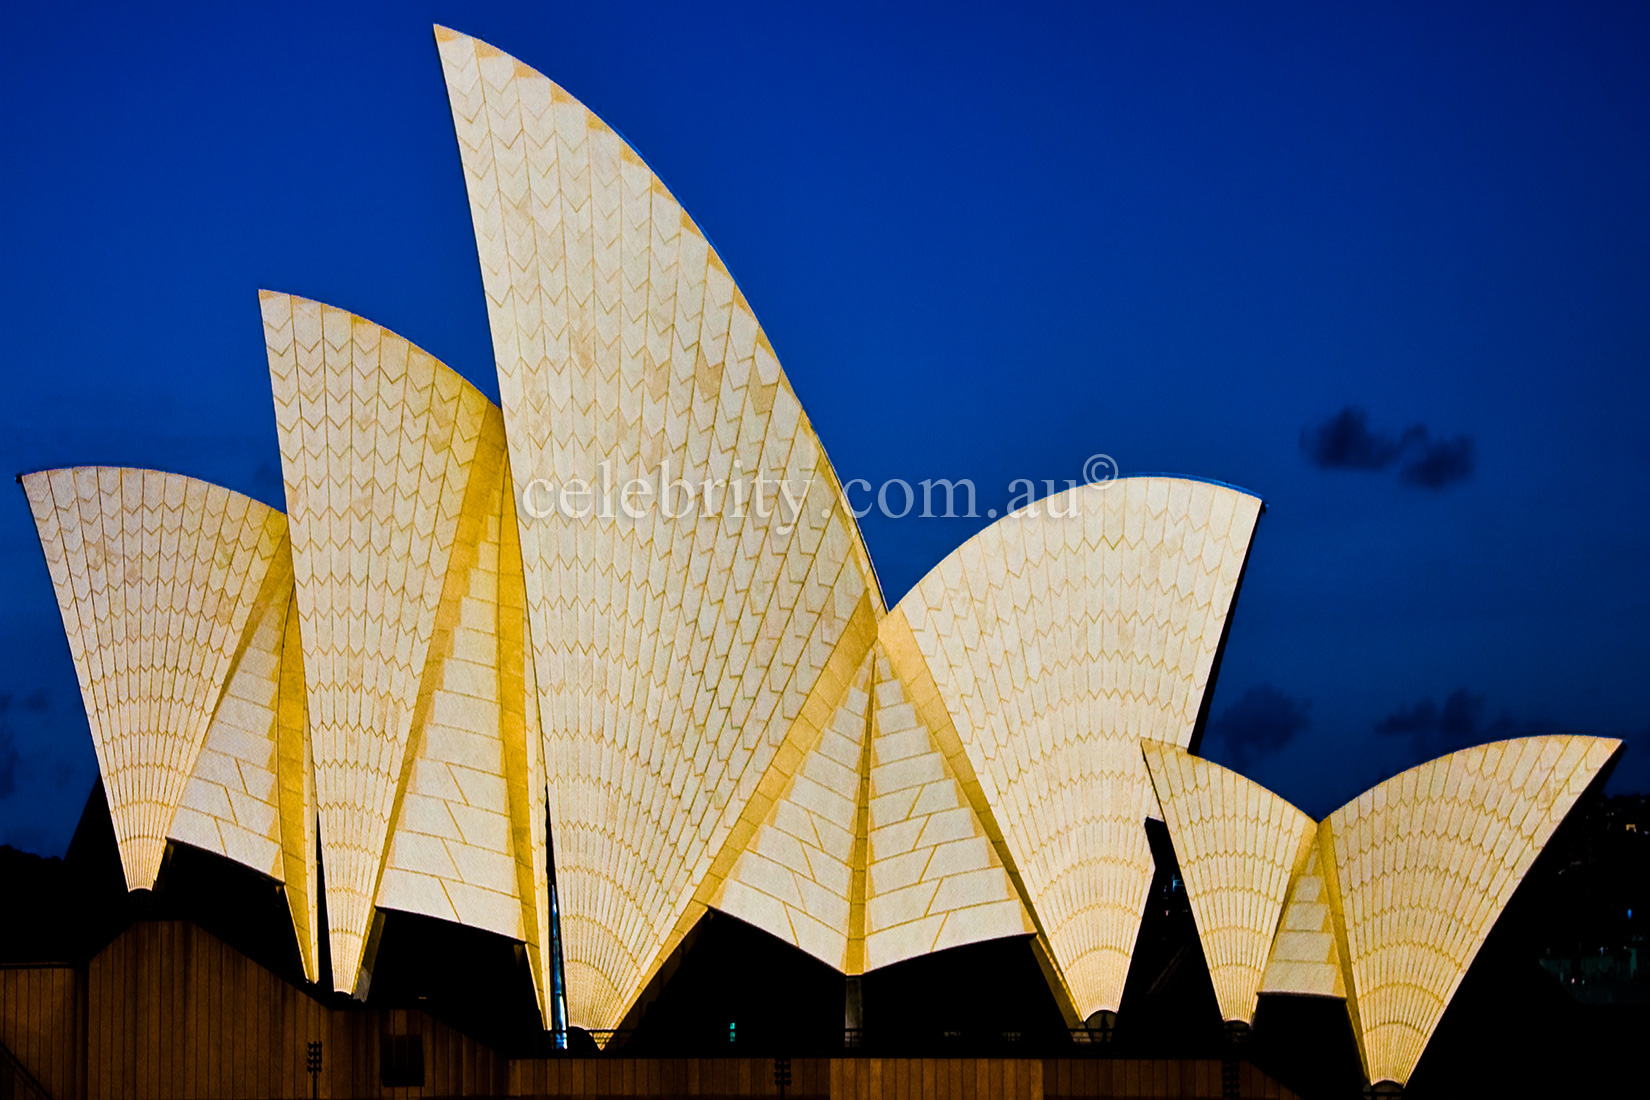 Sydney Opera House in Gold